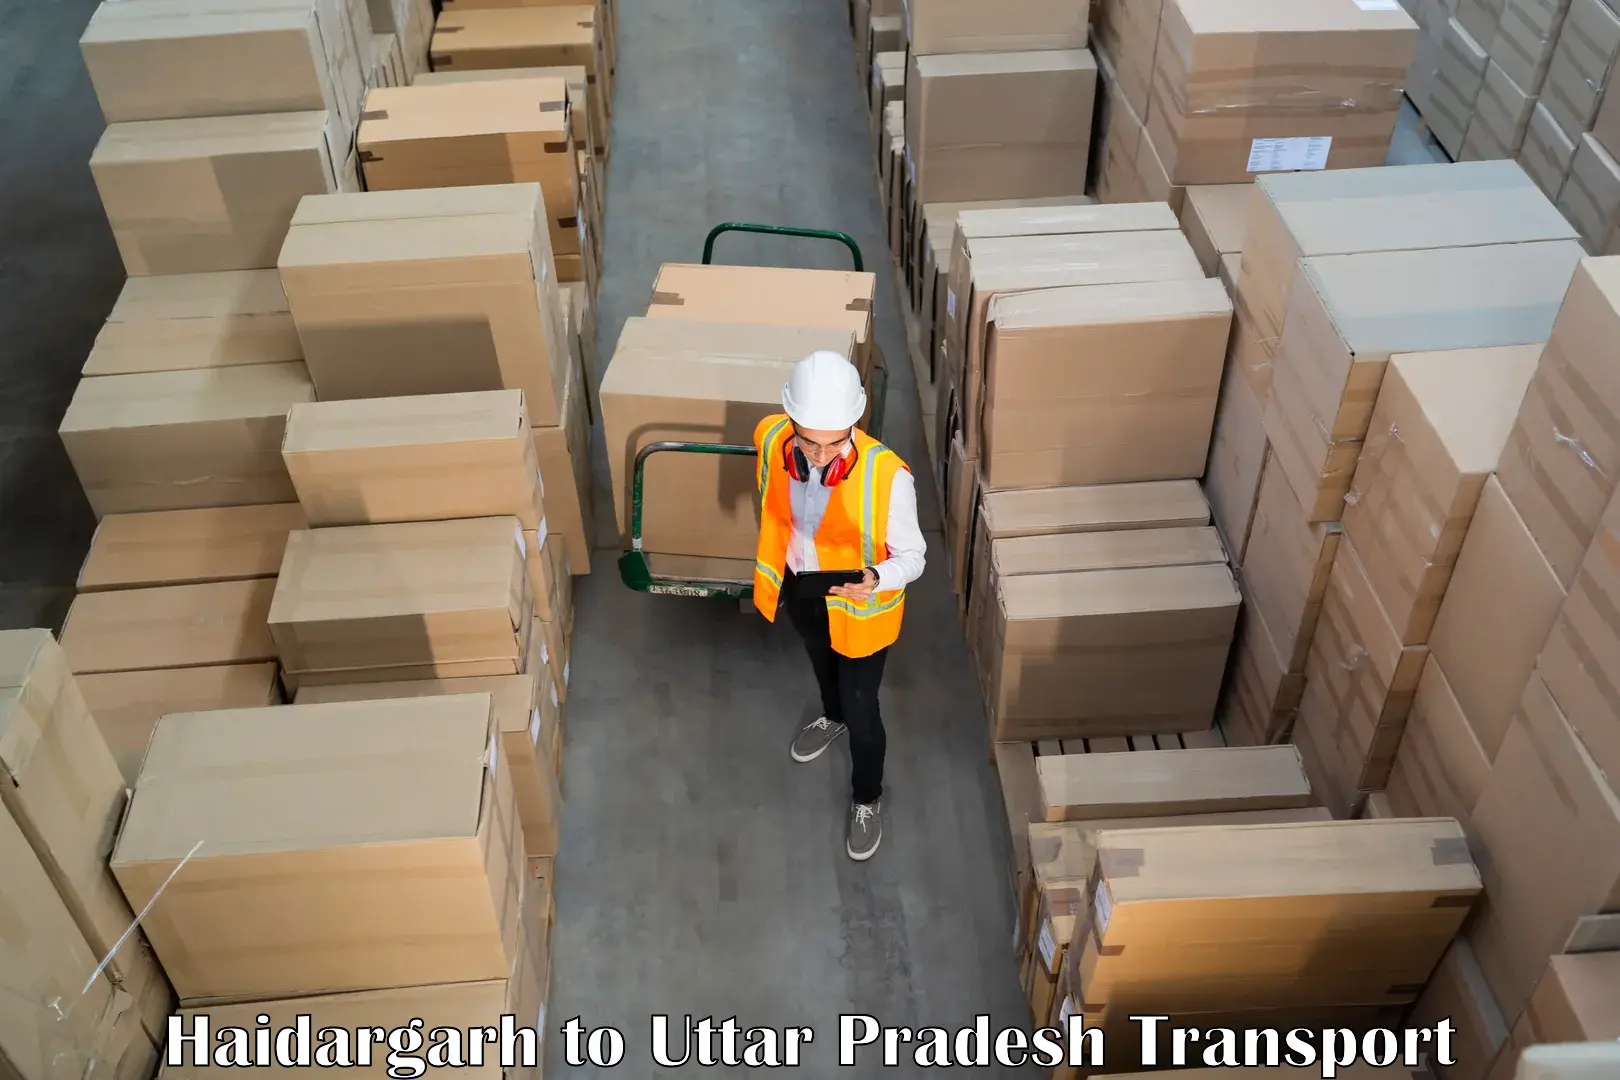 International cargo transportation services Haidargarh to Chopan